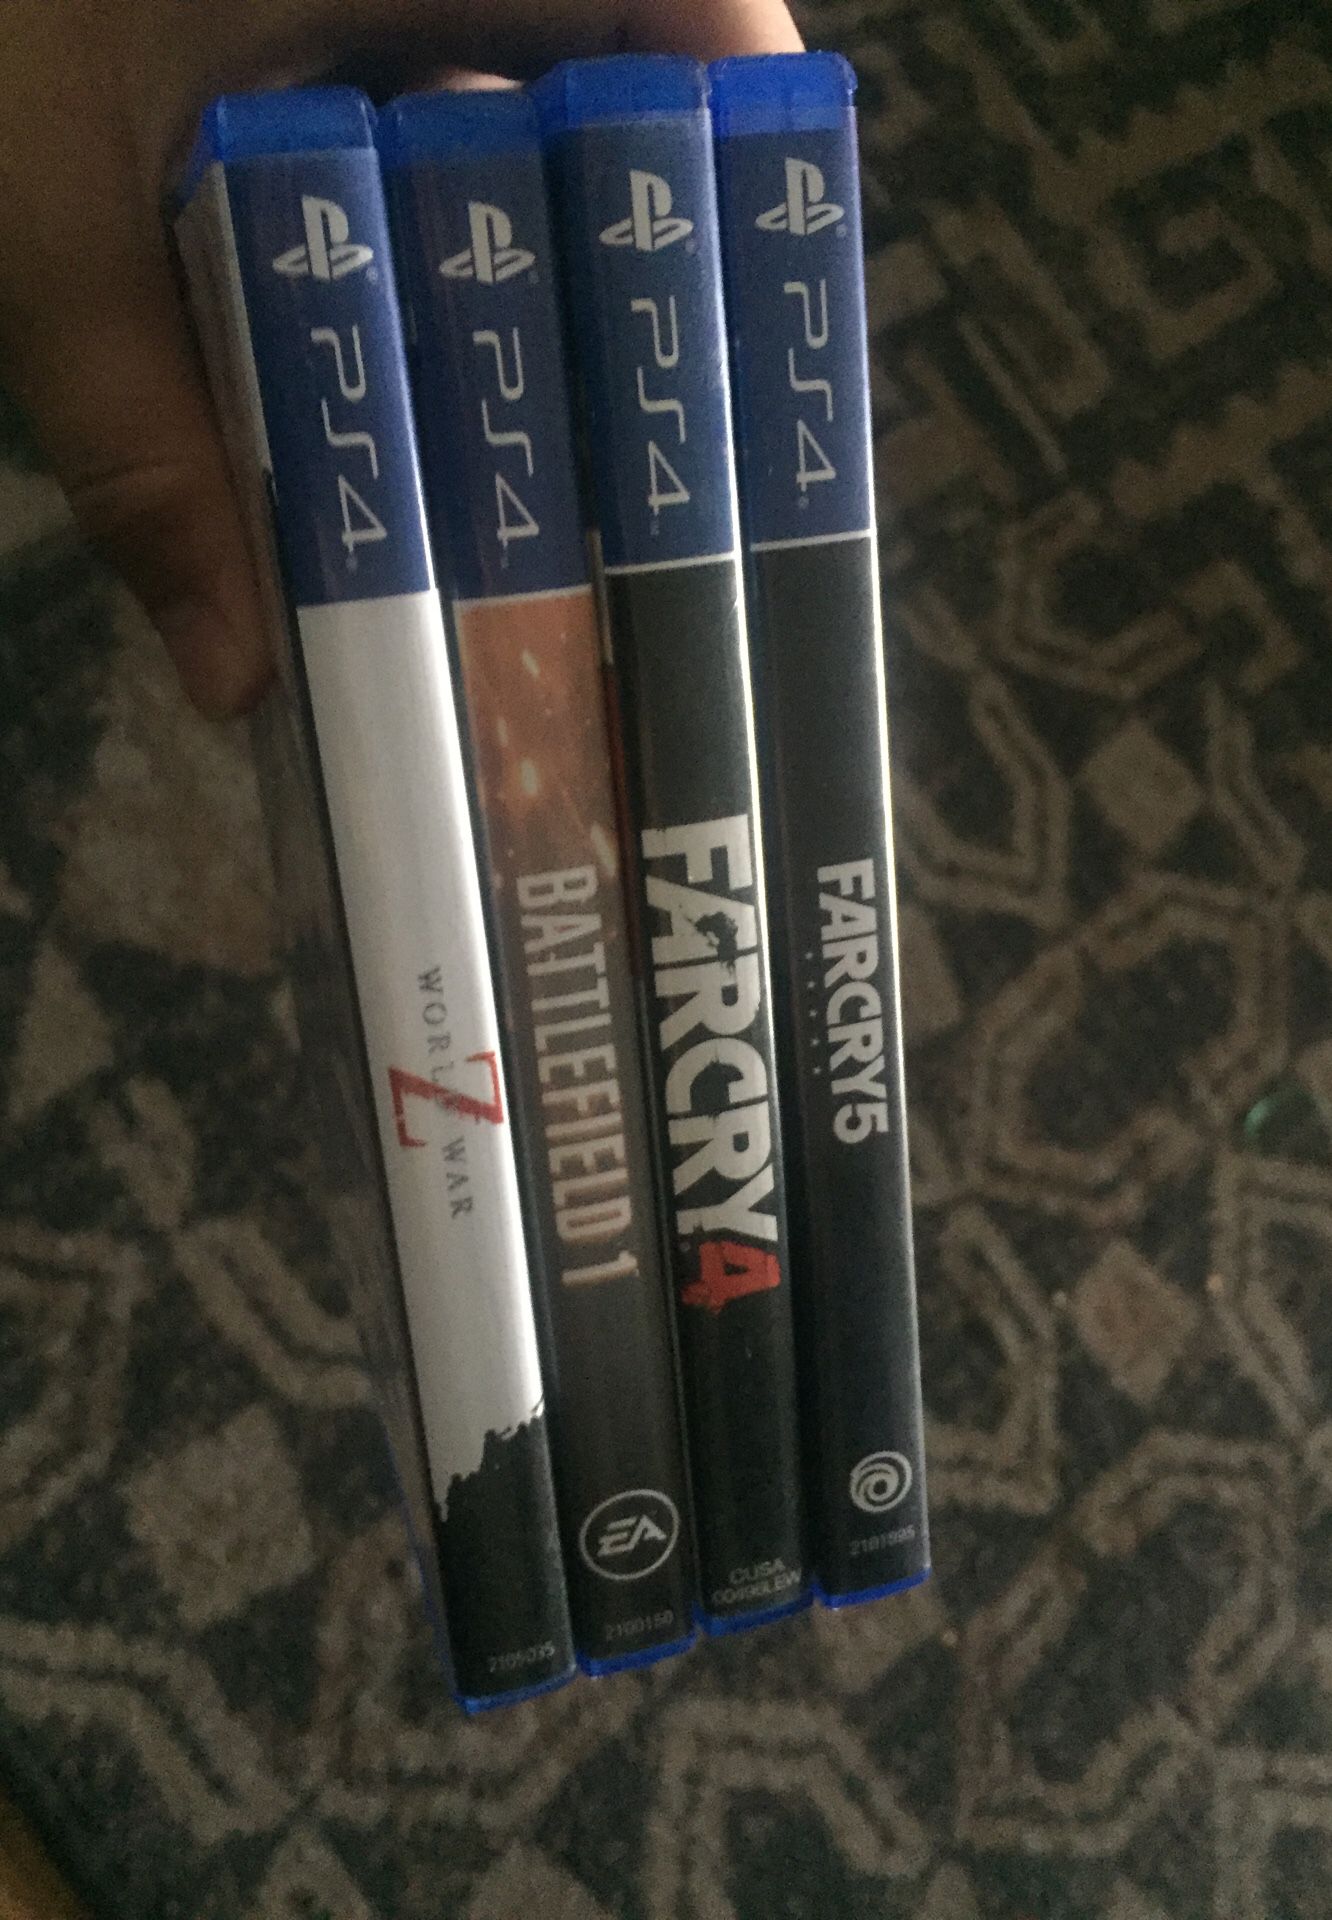 4 PS4 games